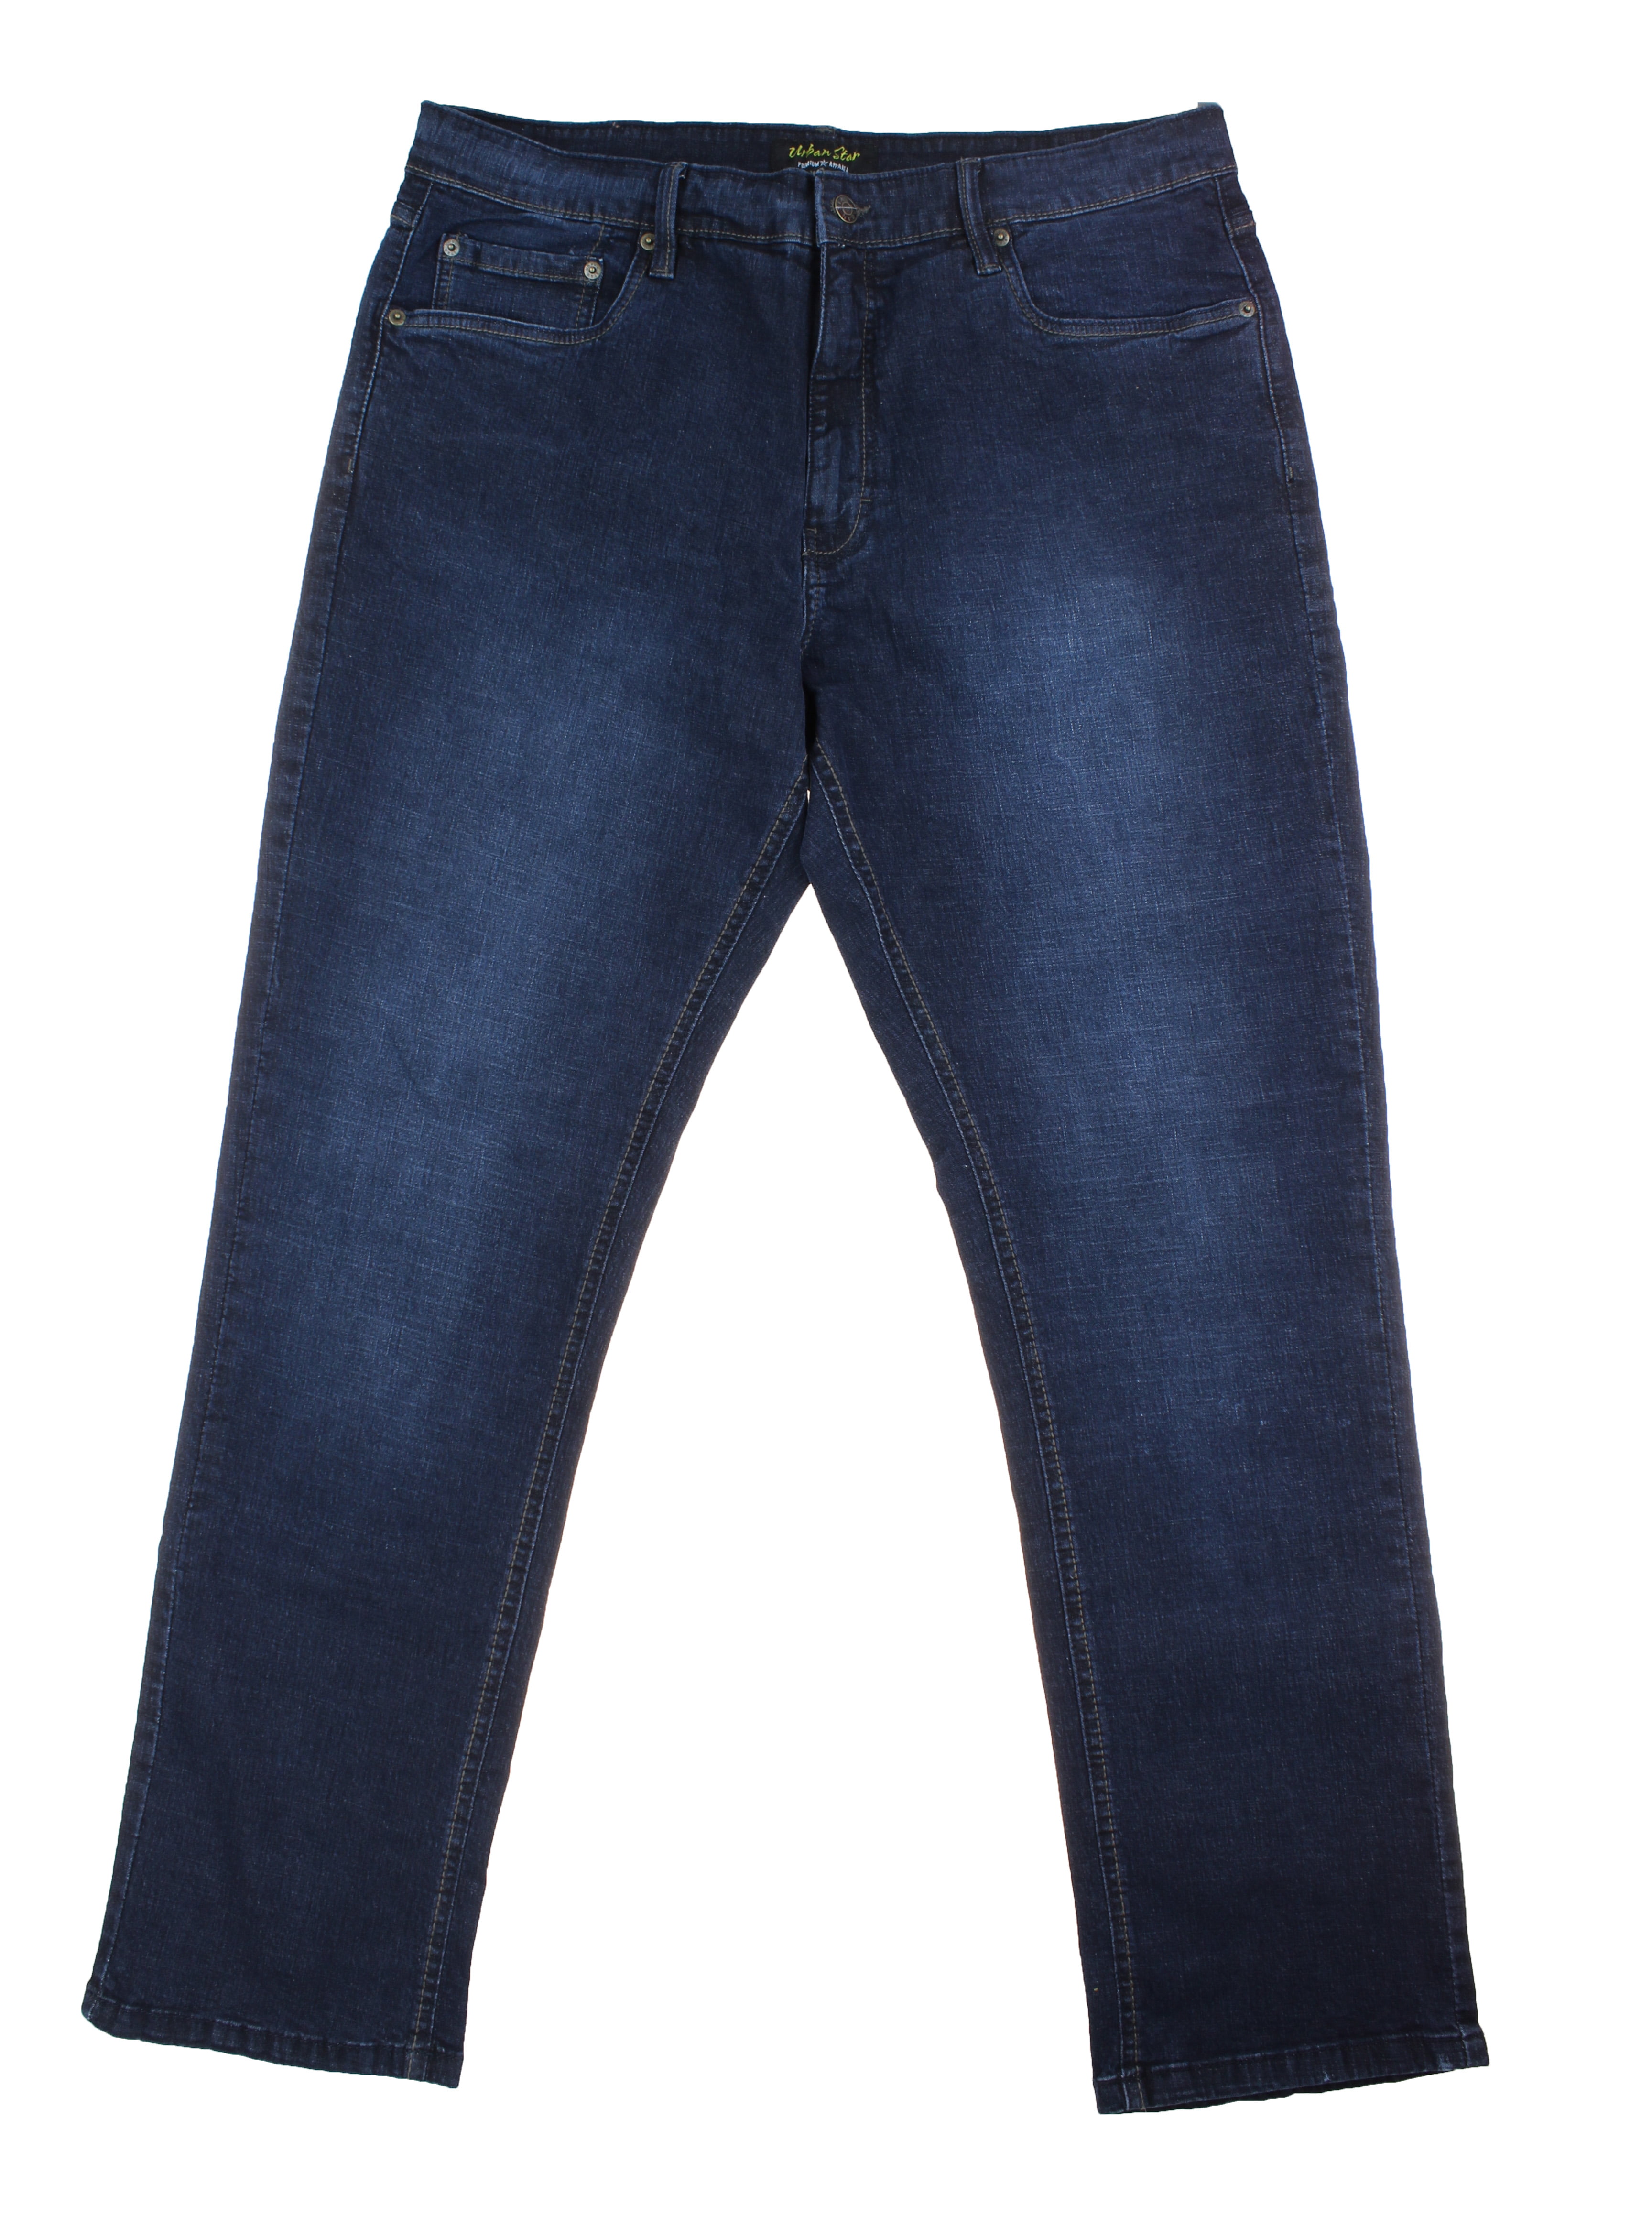 urban star jeans 38x32